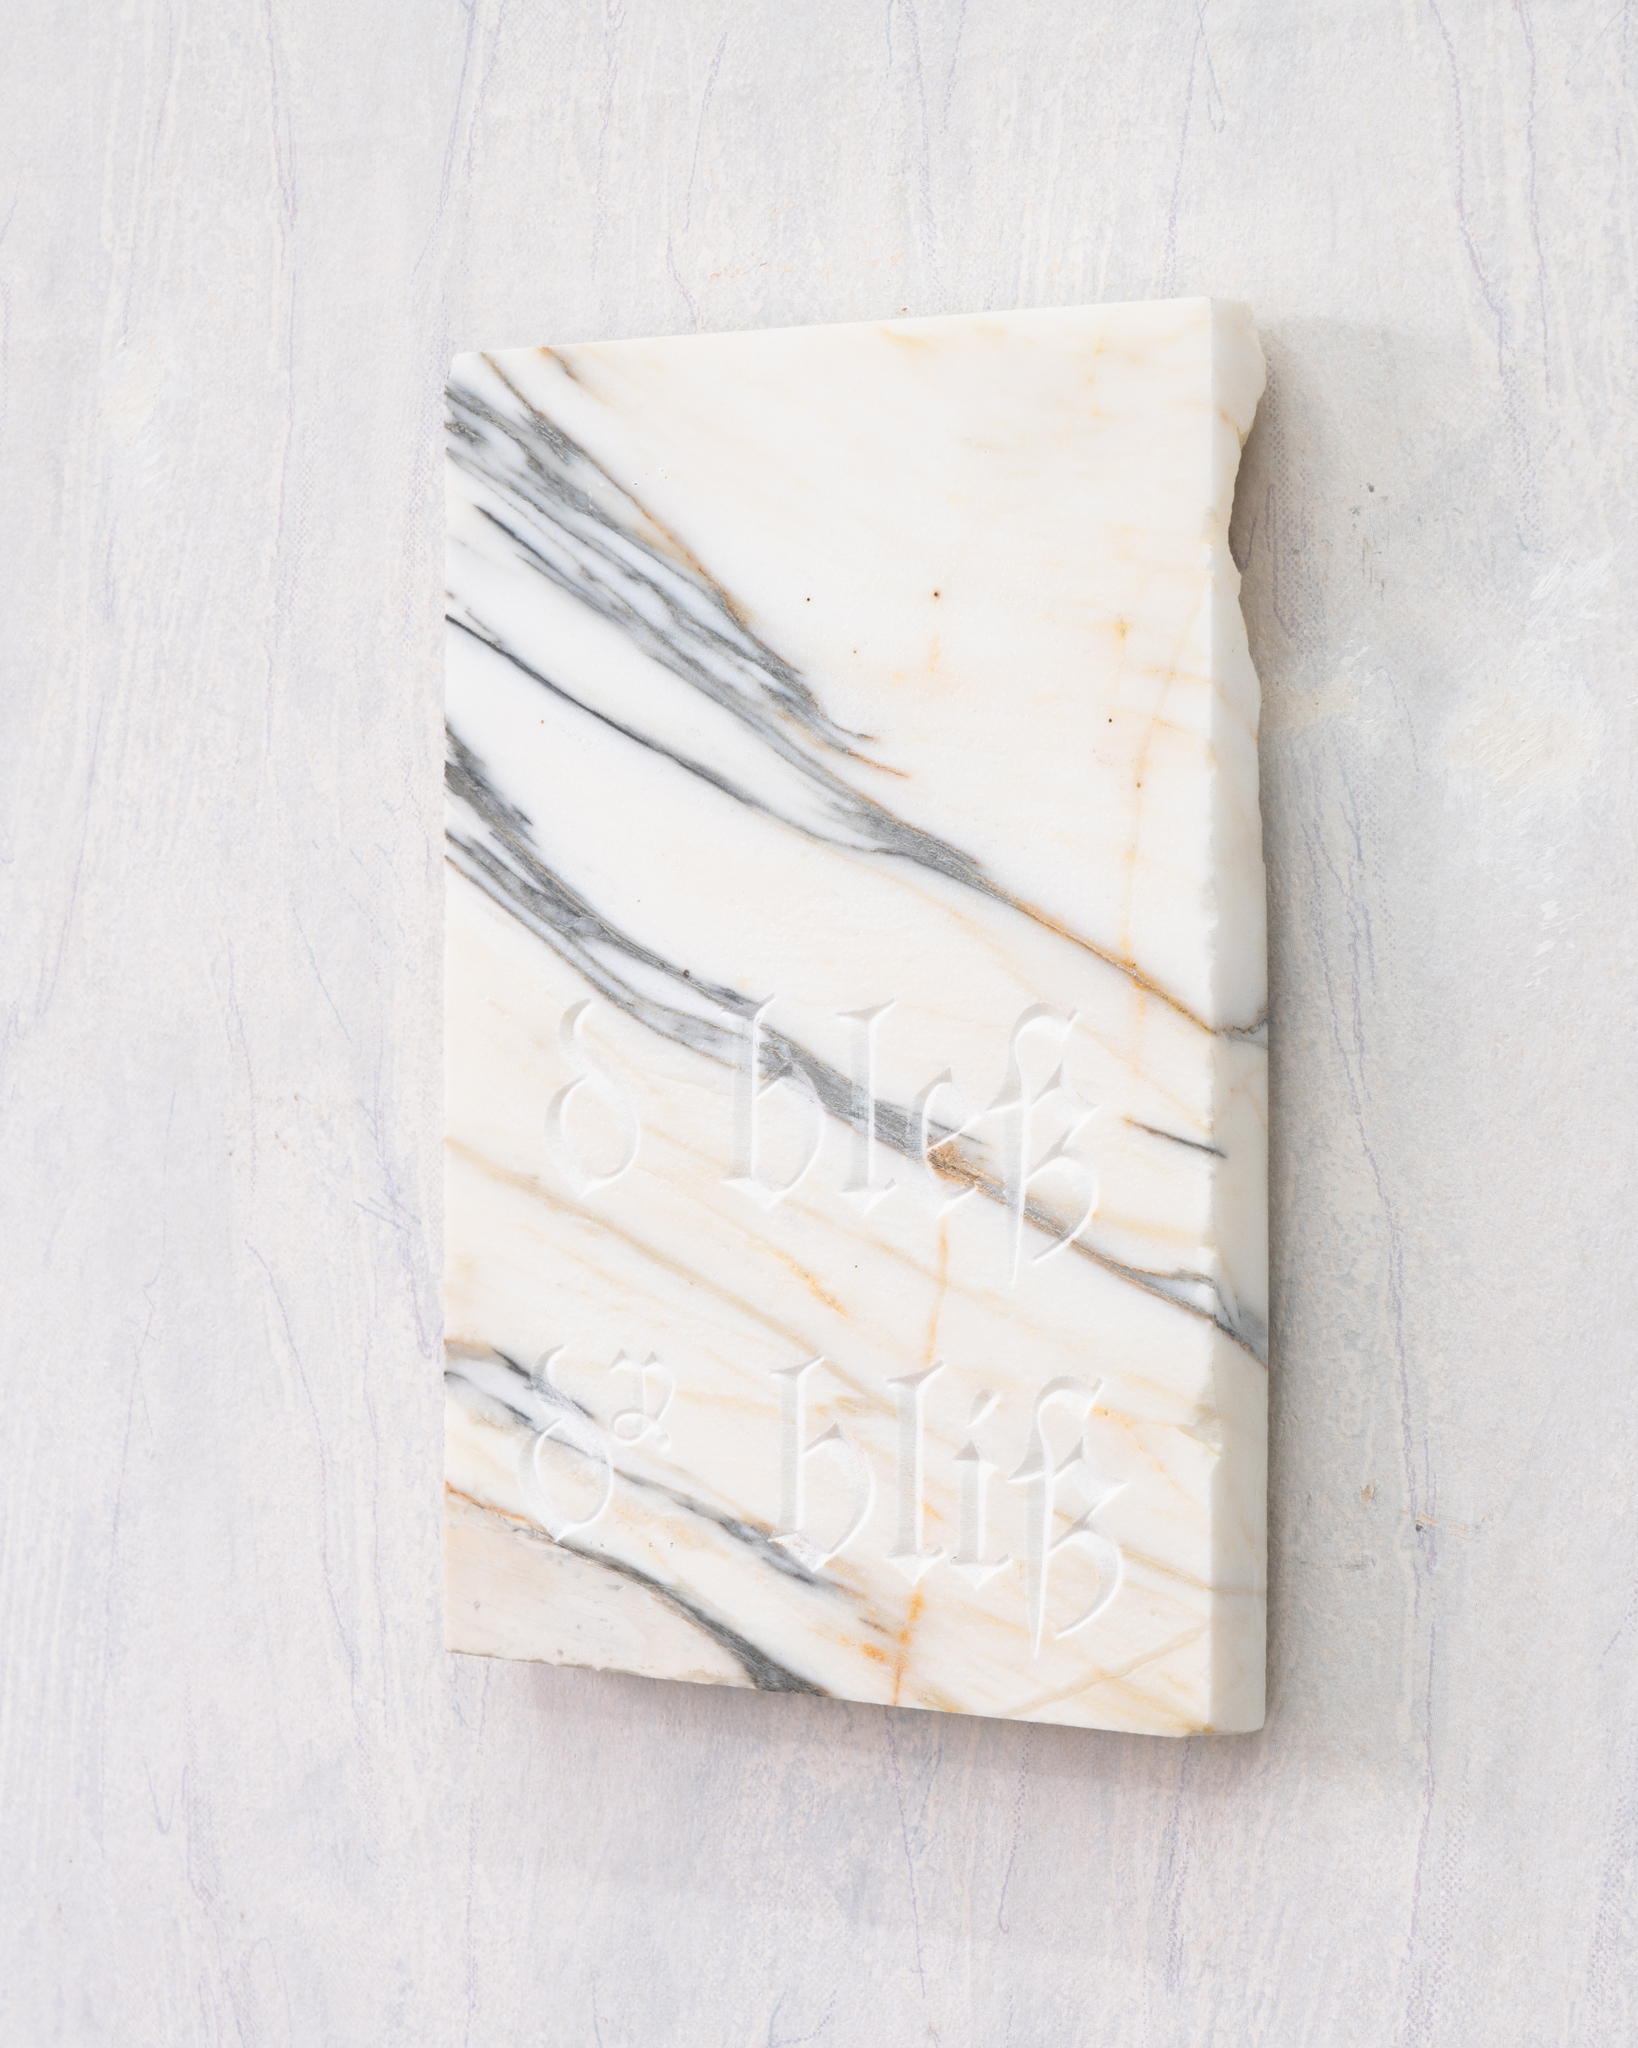 Maarten van Roy, Untitled (God Bless Daily Bliss), 2022, Calacatta Oro marble, 26 x 18 x 2 cm